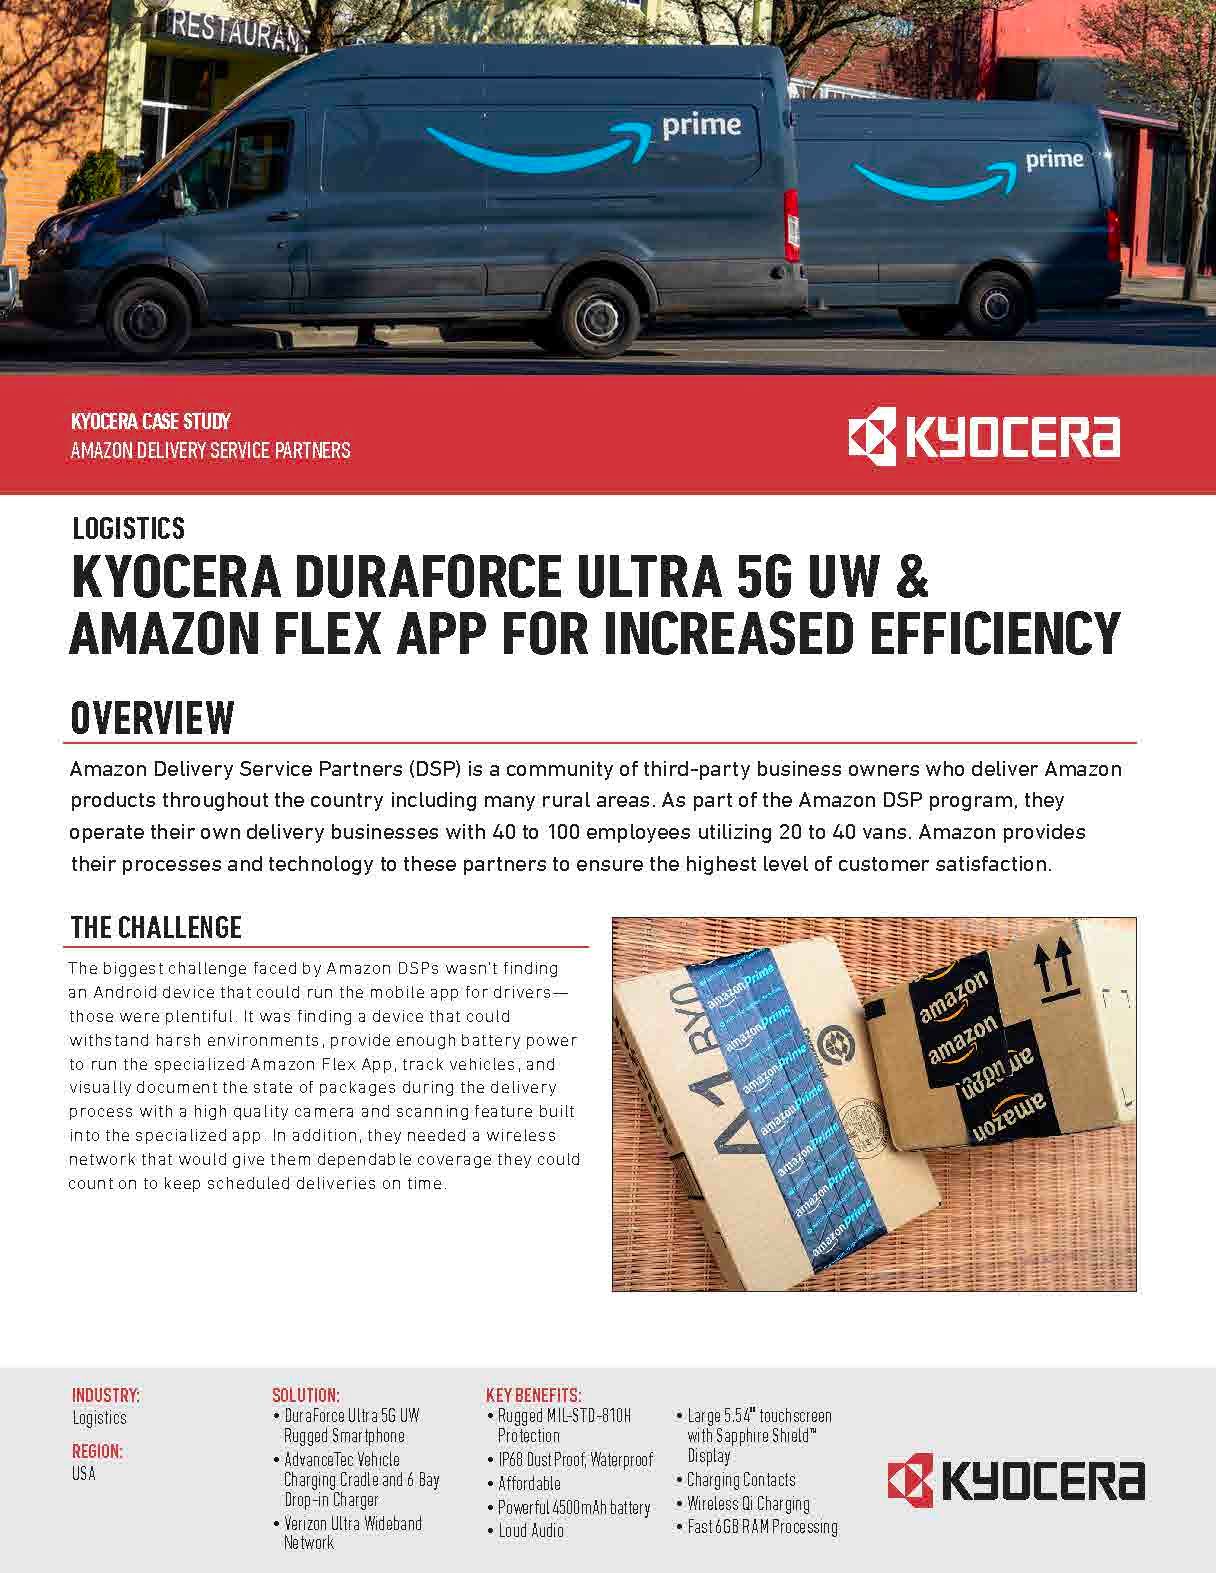 A brochure for kyocera duraforce ultra 5g uw & amazon flex app for increased efficiency.